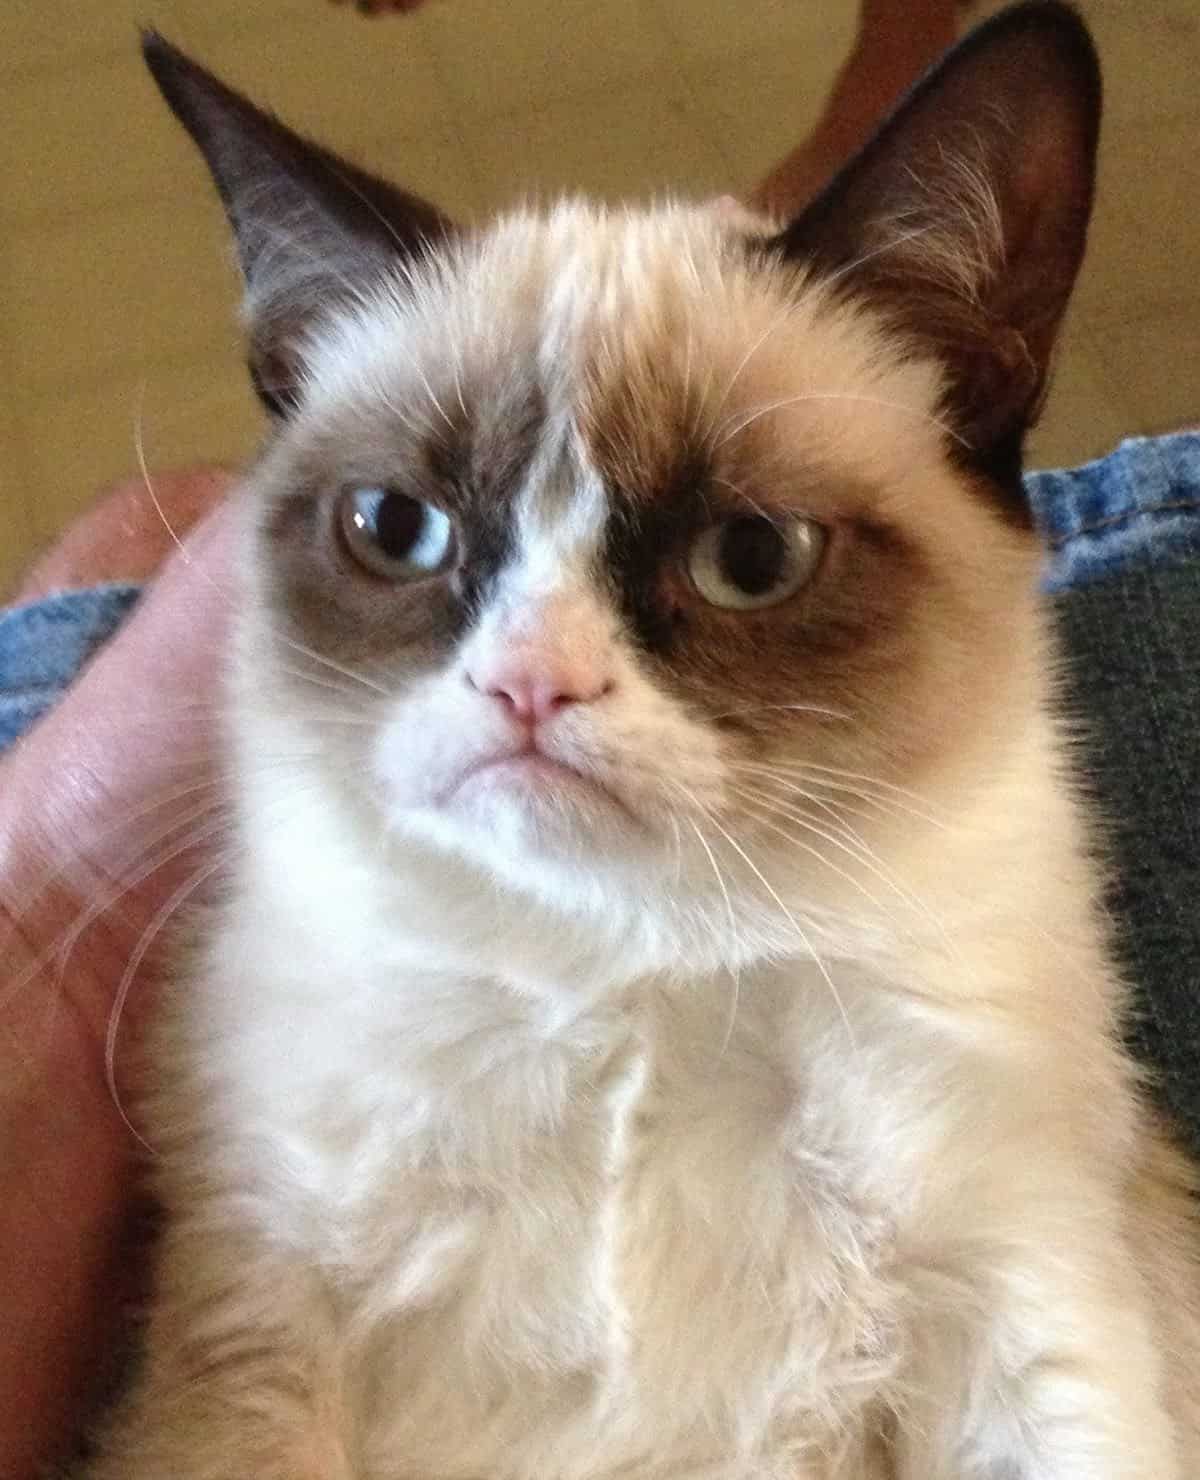 original photo of grumpy cat